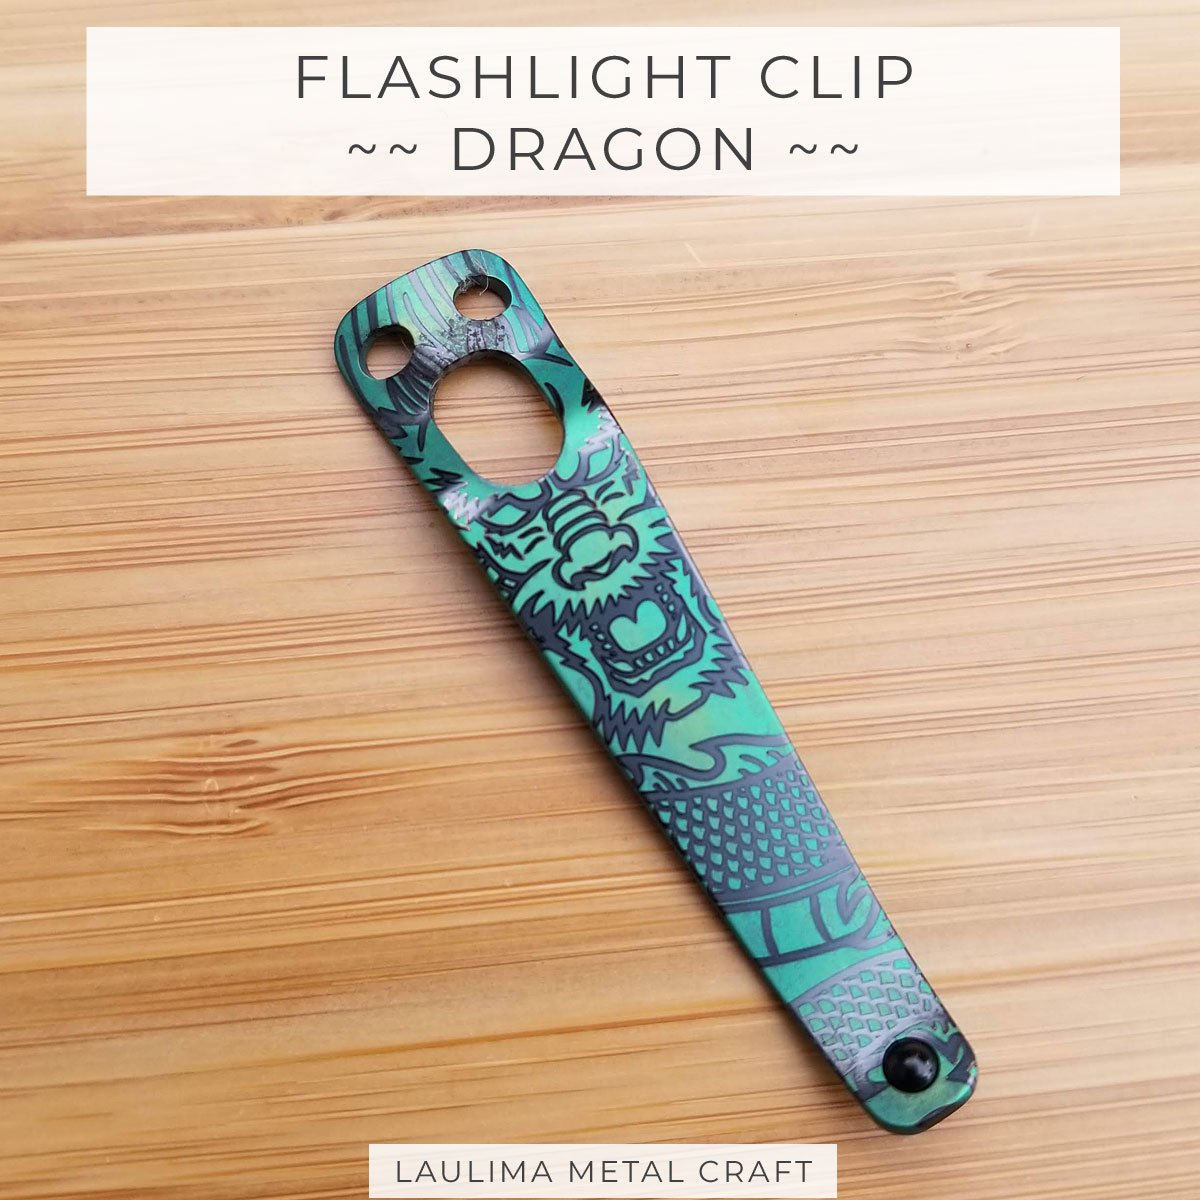 Flashlight Clips